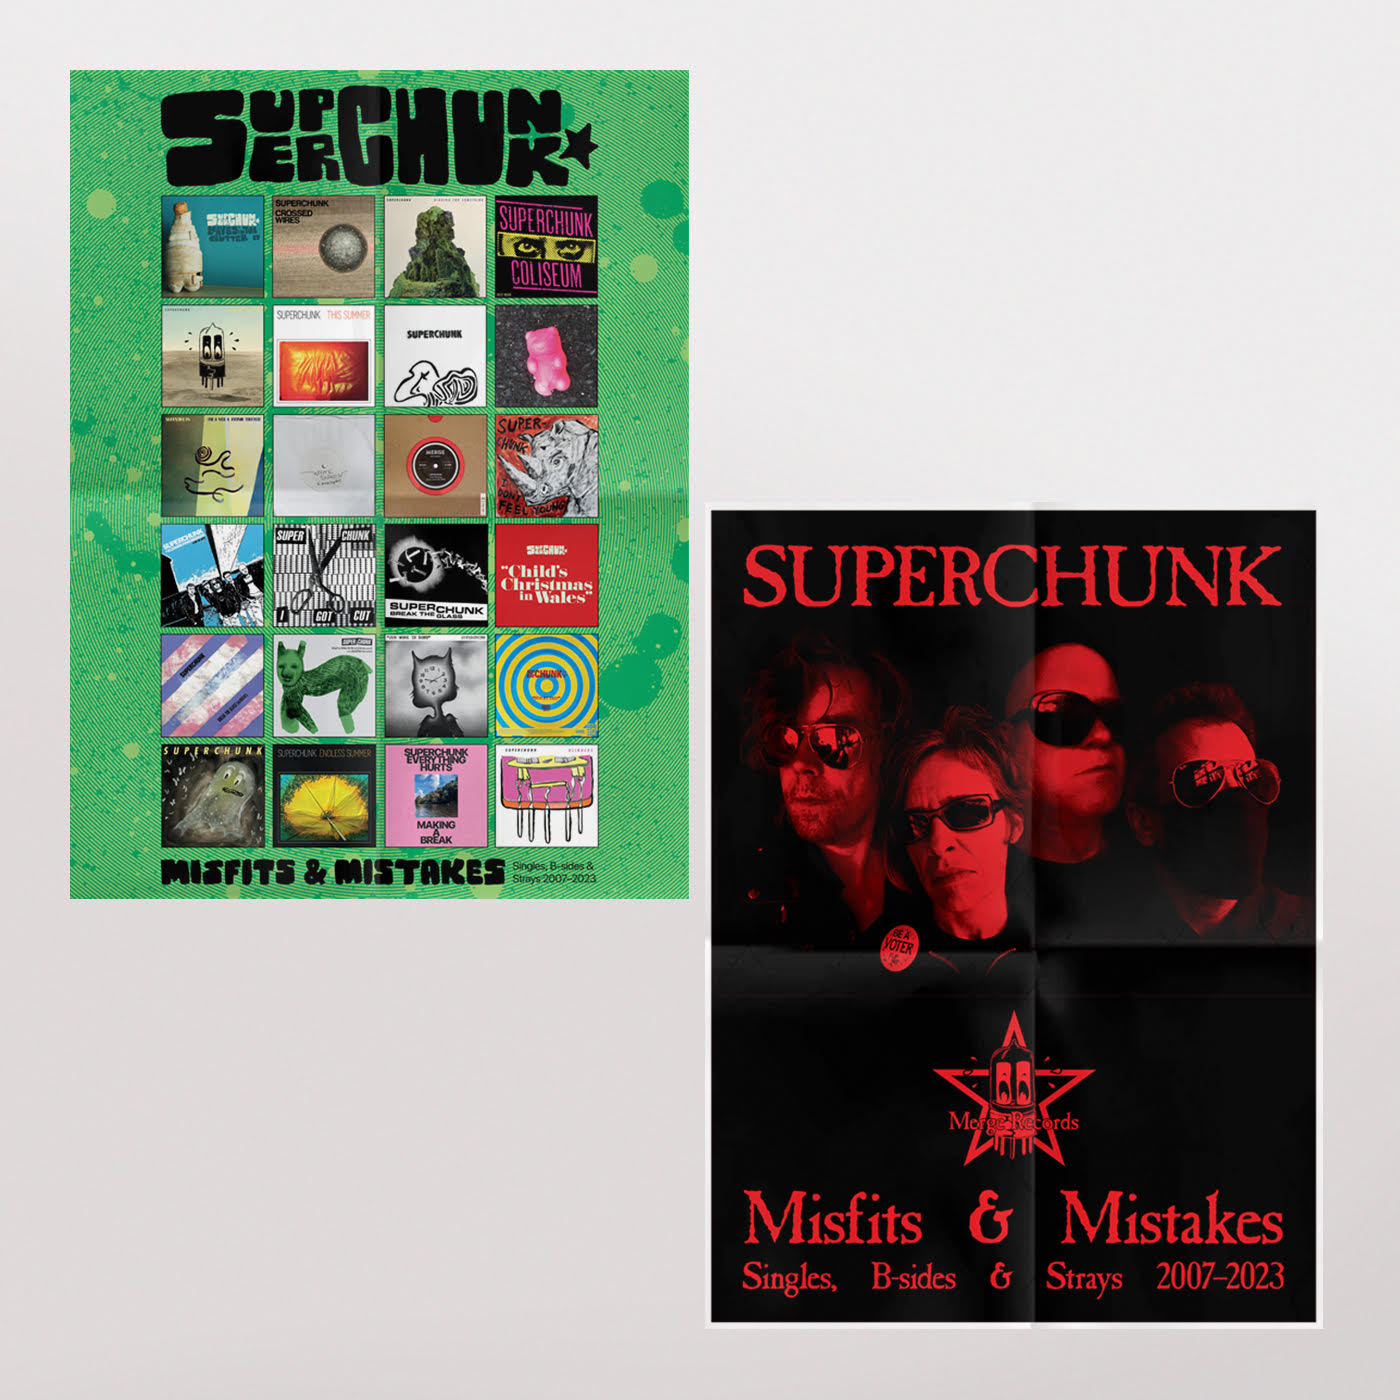 Superchunk - Misfits & Mistakes: Singles, B-Sides & Strays (2007-2023) 4LP / 2CD